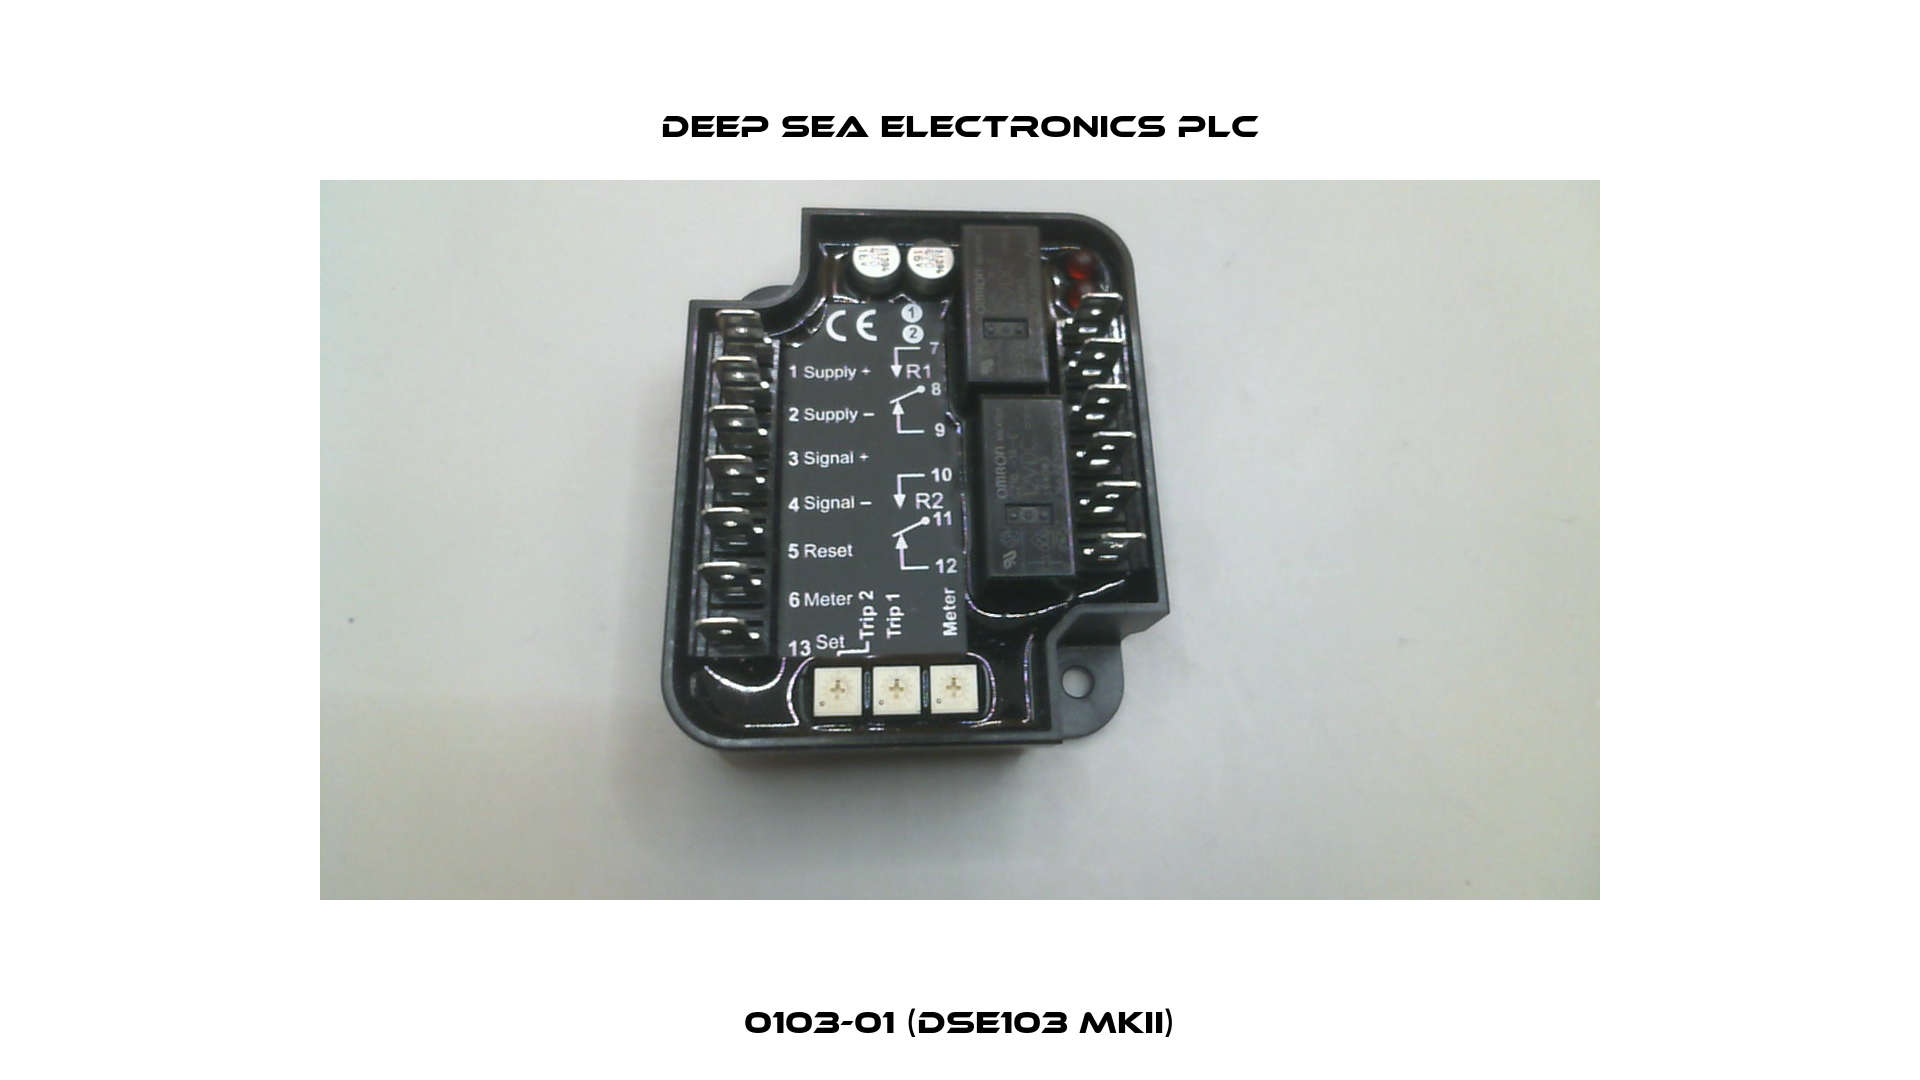 0103-01 (DSE103 MKII) DEEP SEA ELECTRONICS PLC